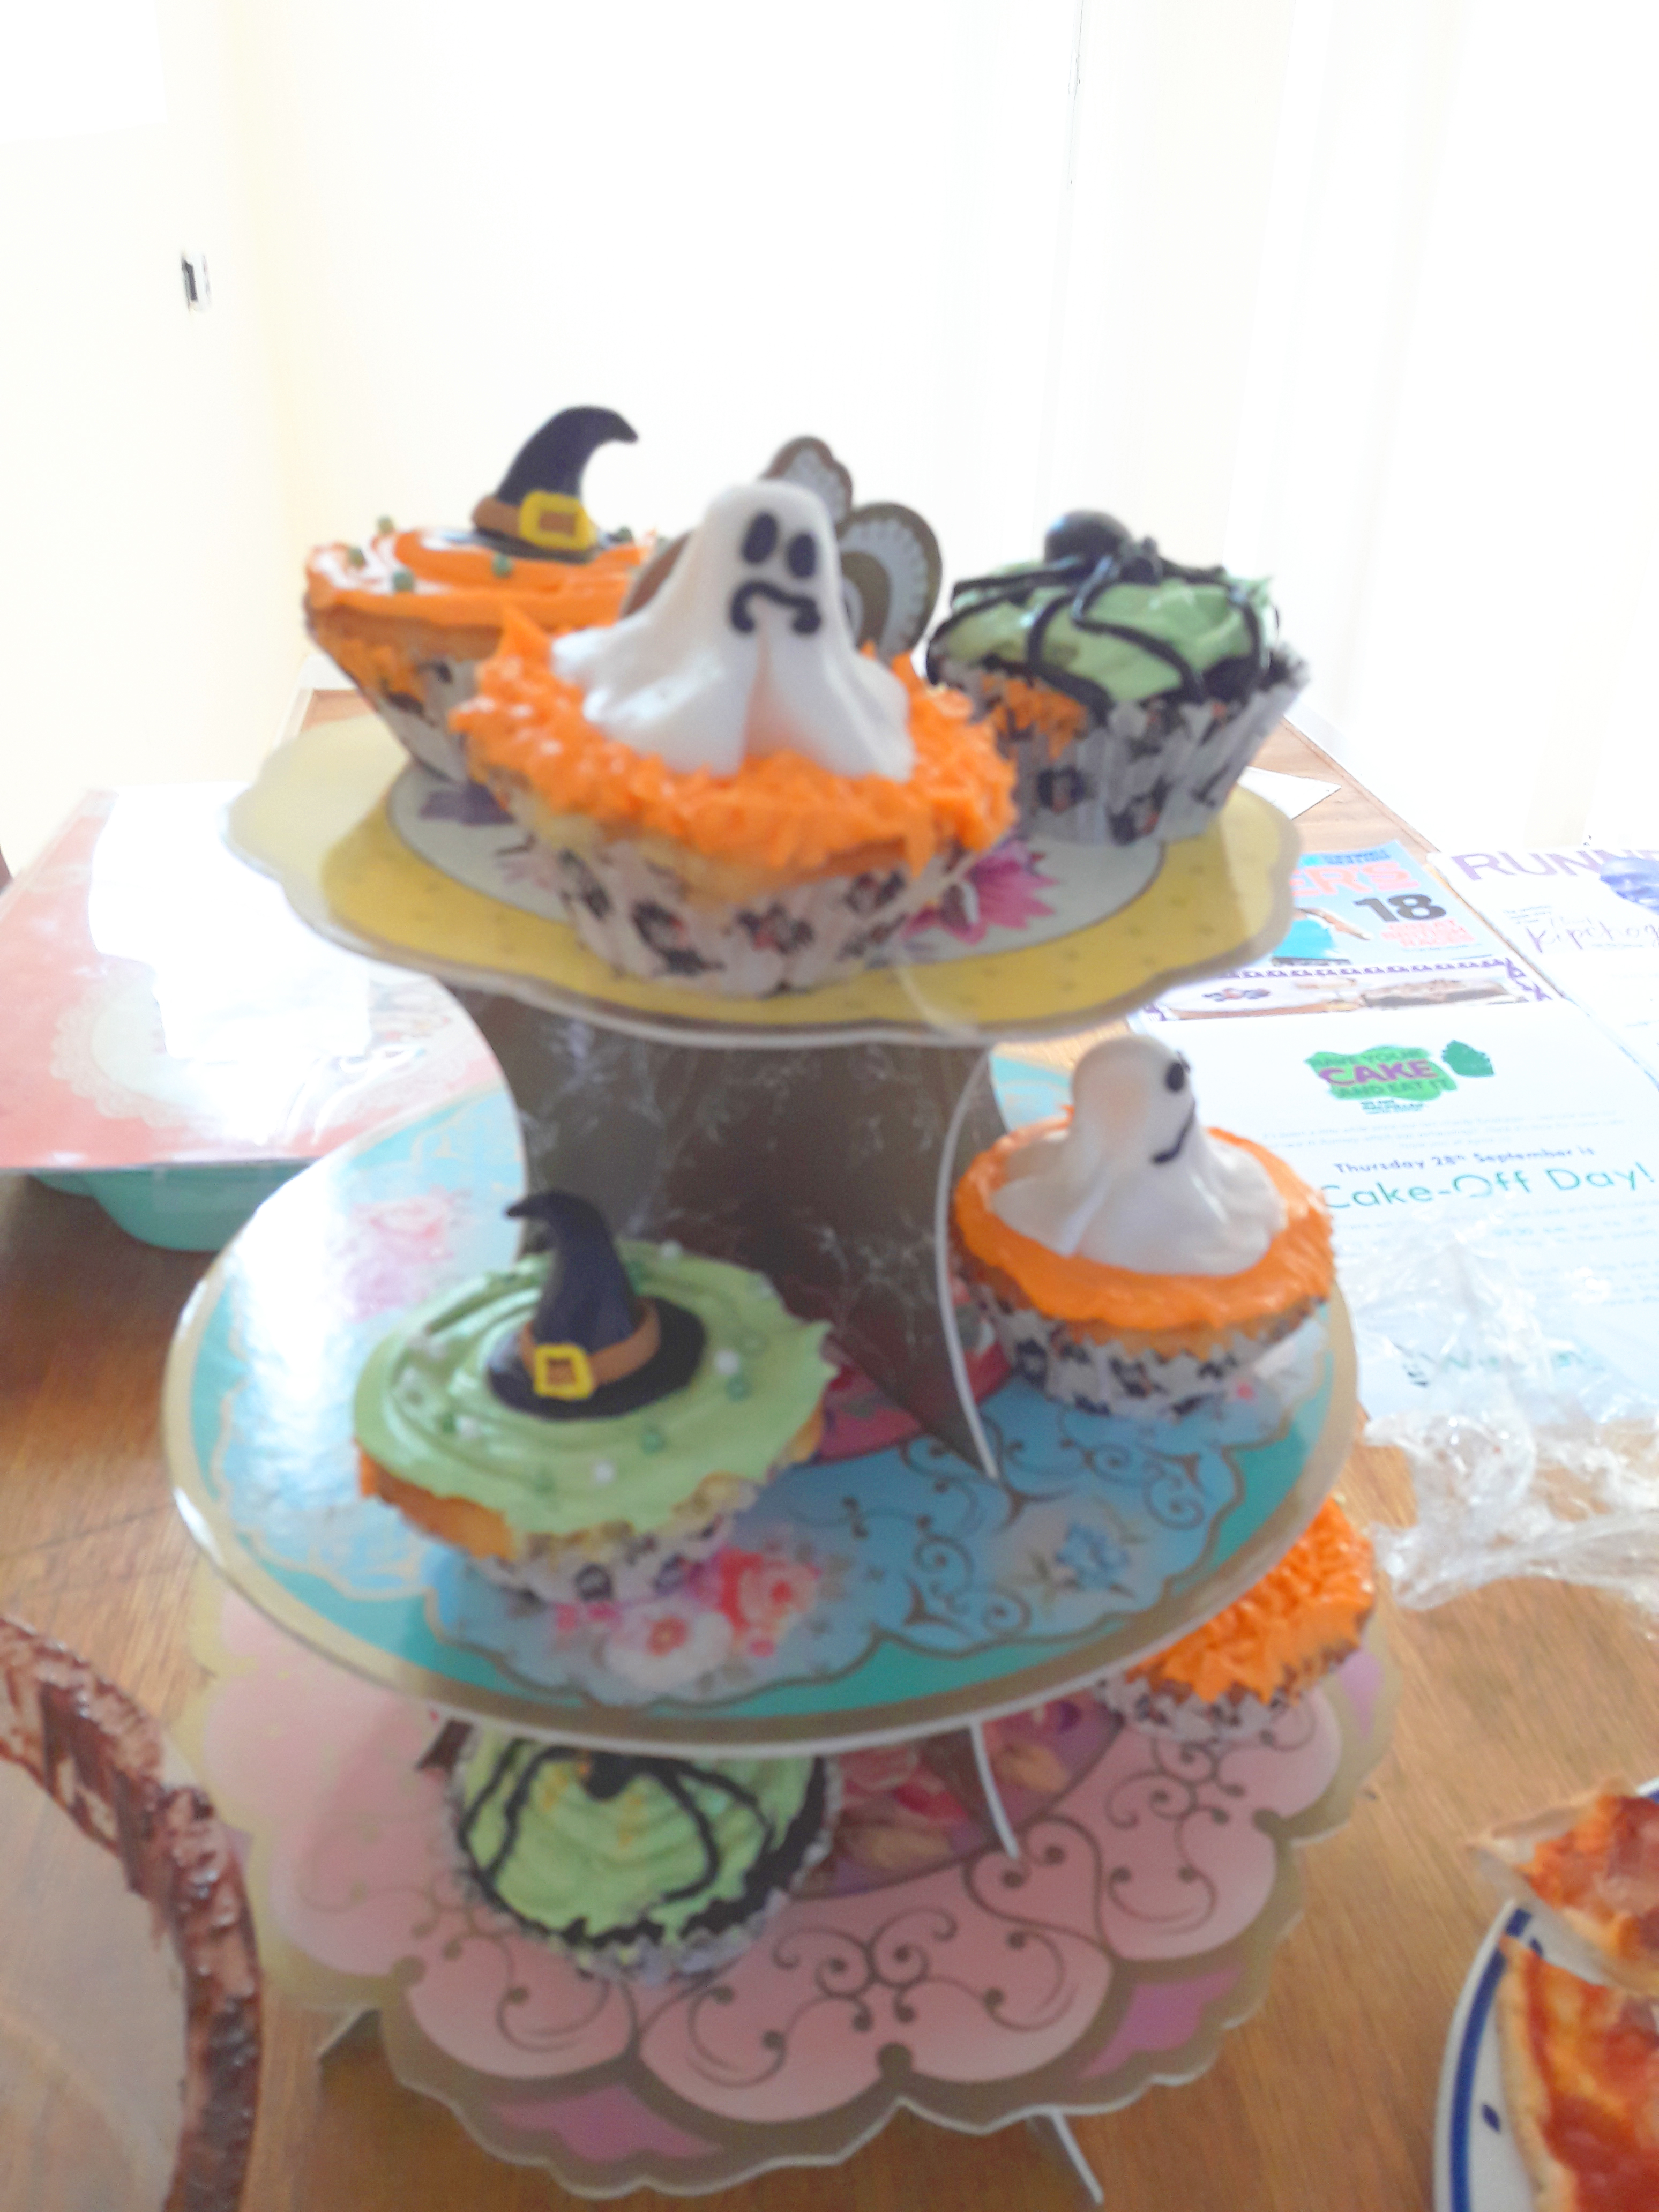 The winning Halloween themed cupcakes.